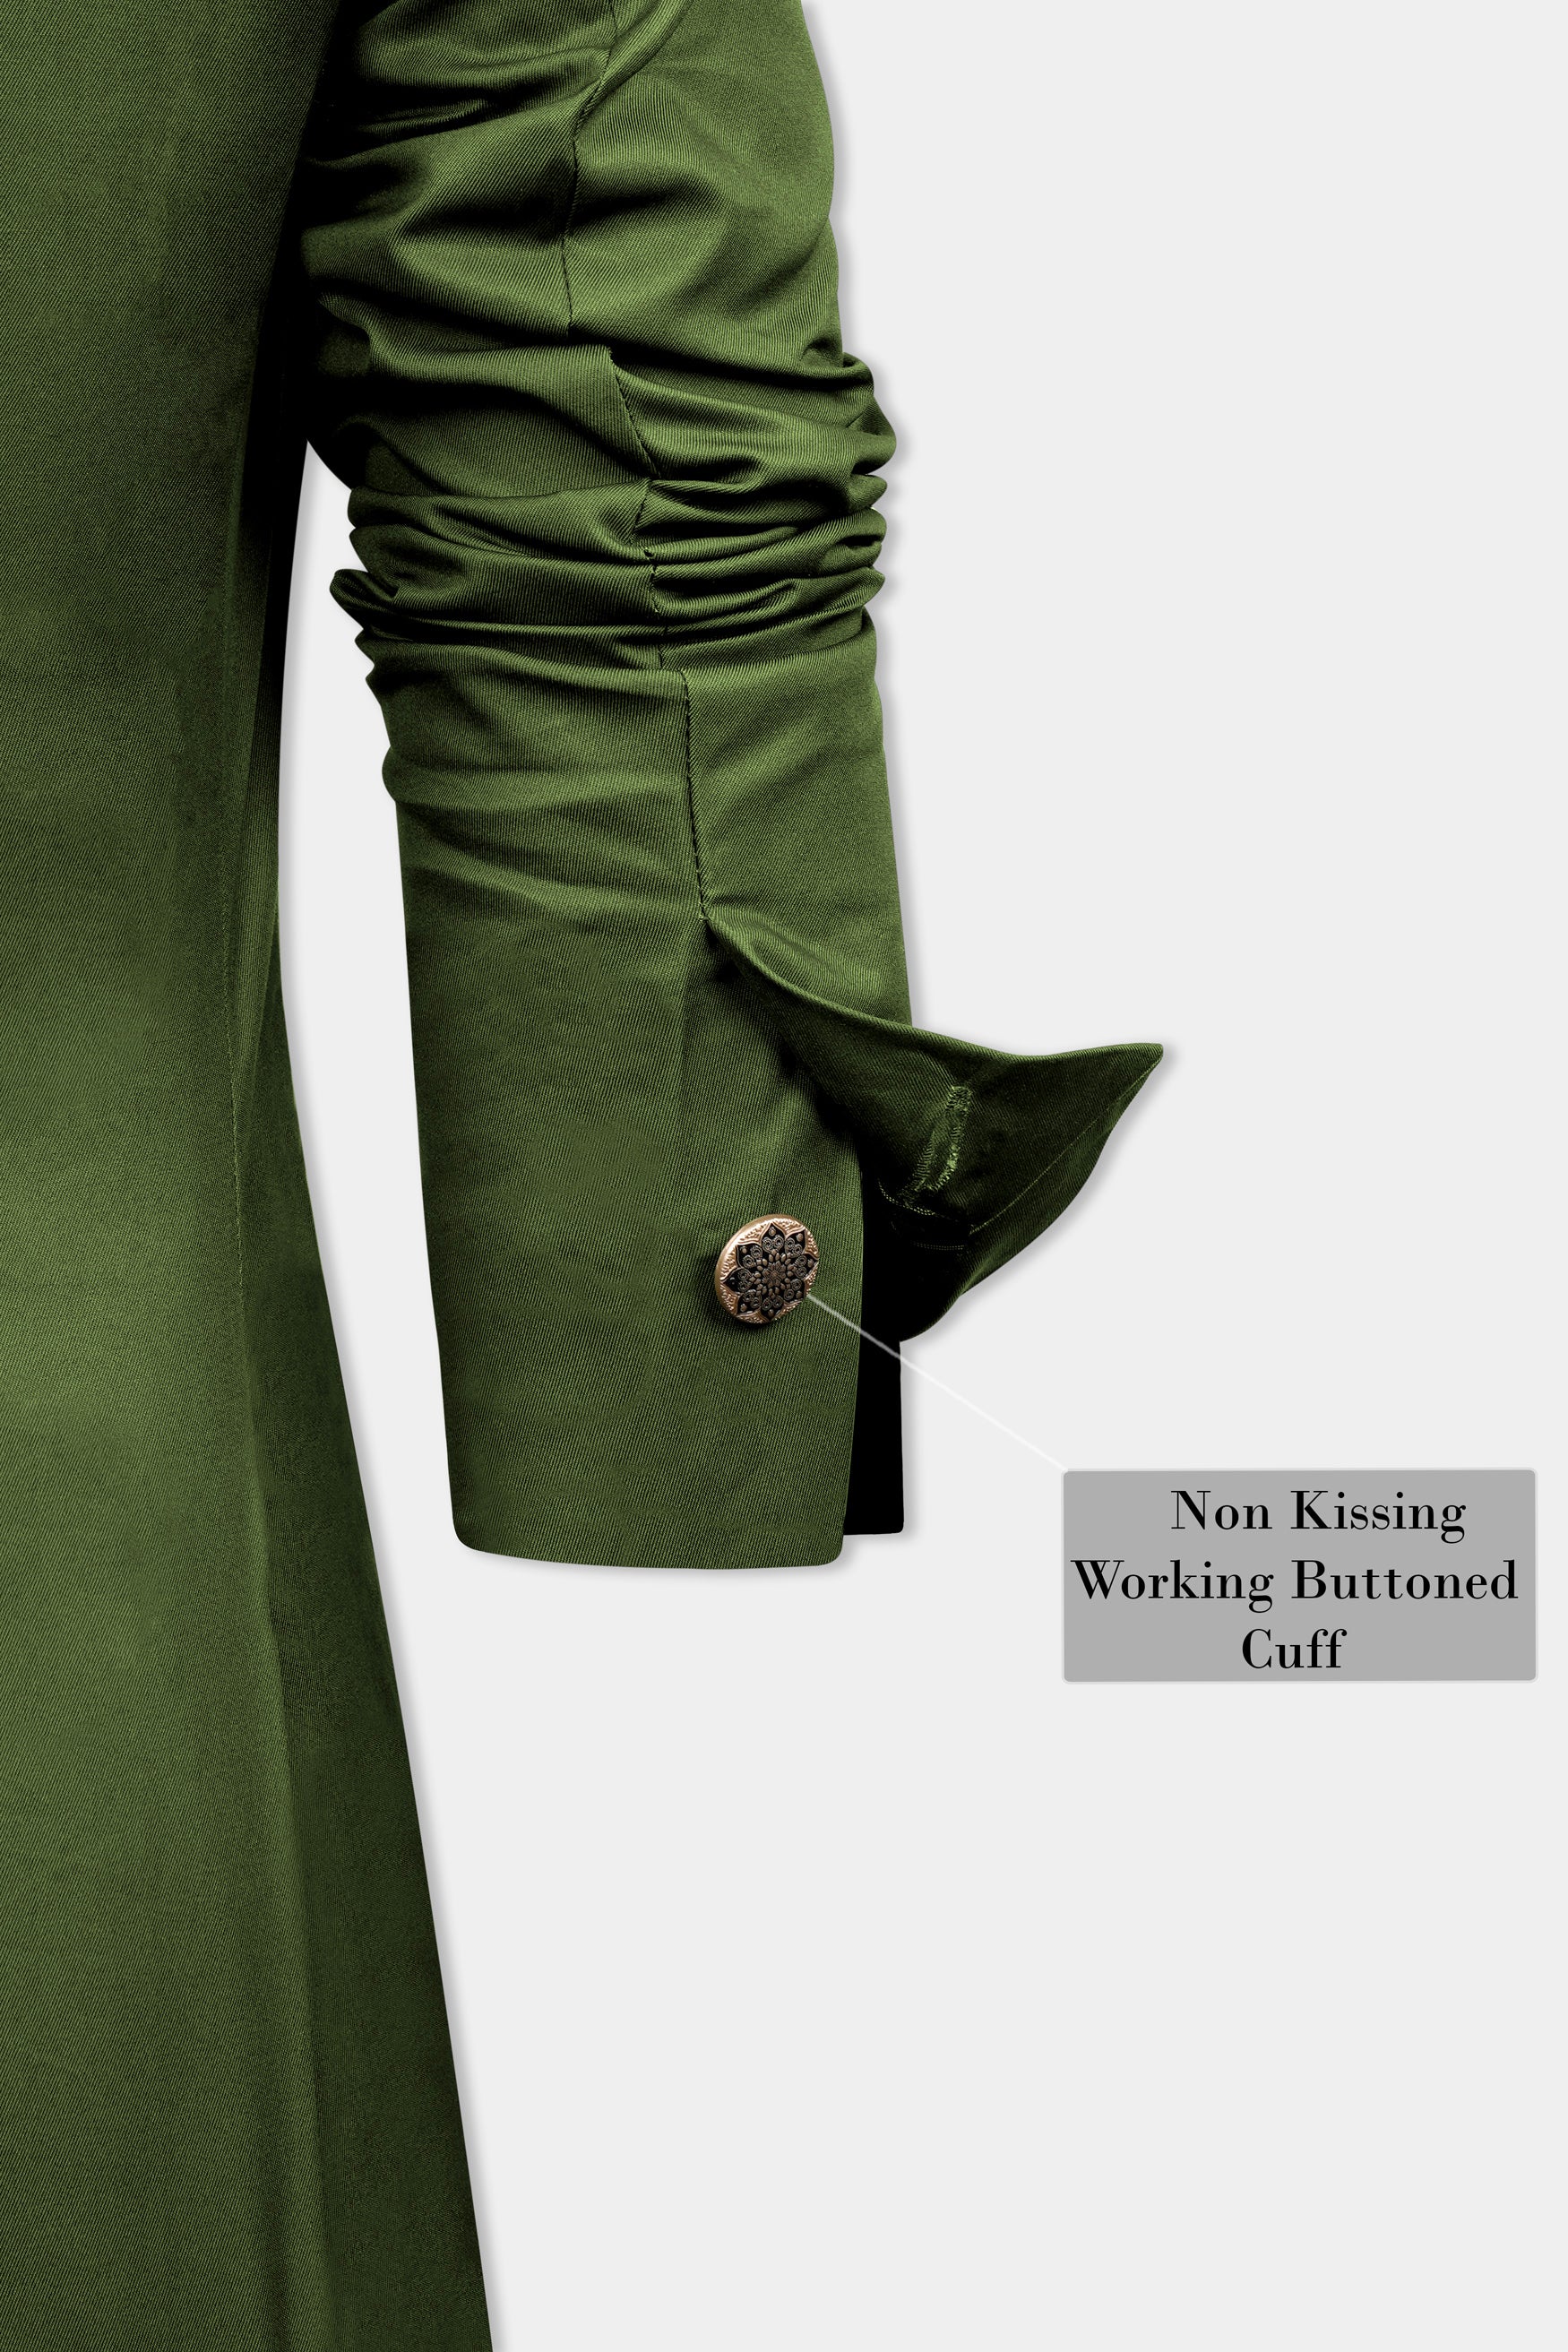 Juniper Green Wool Rich Women’s Designer Tuxedo Suit